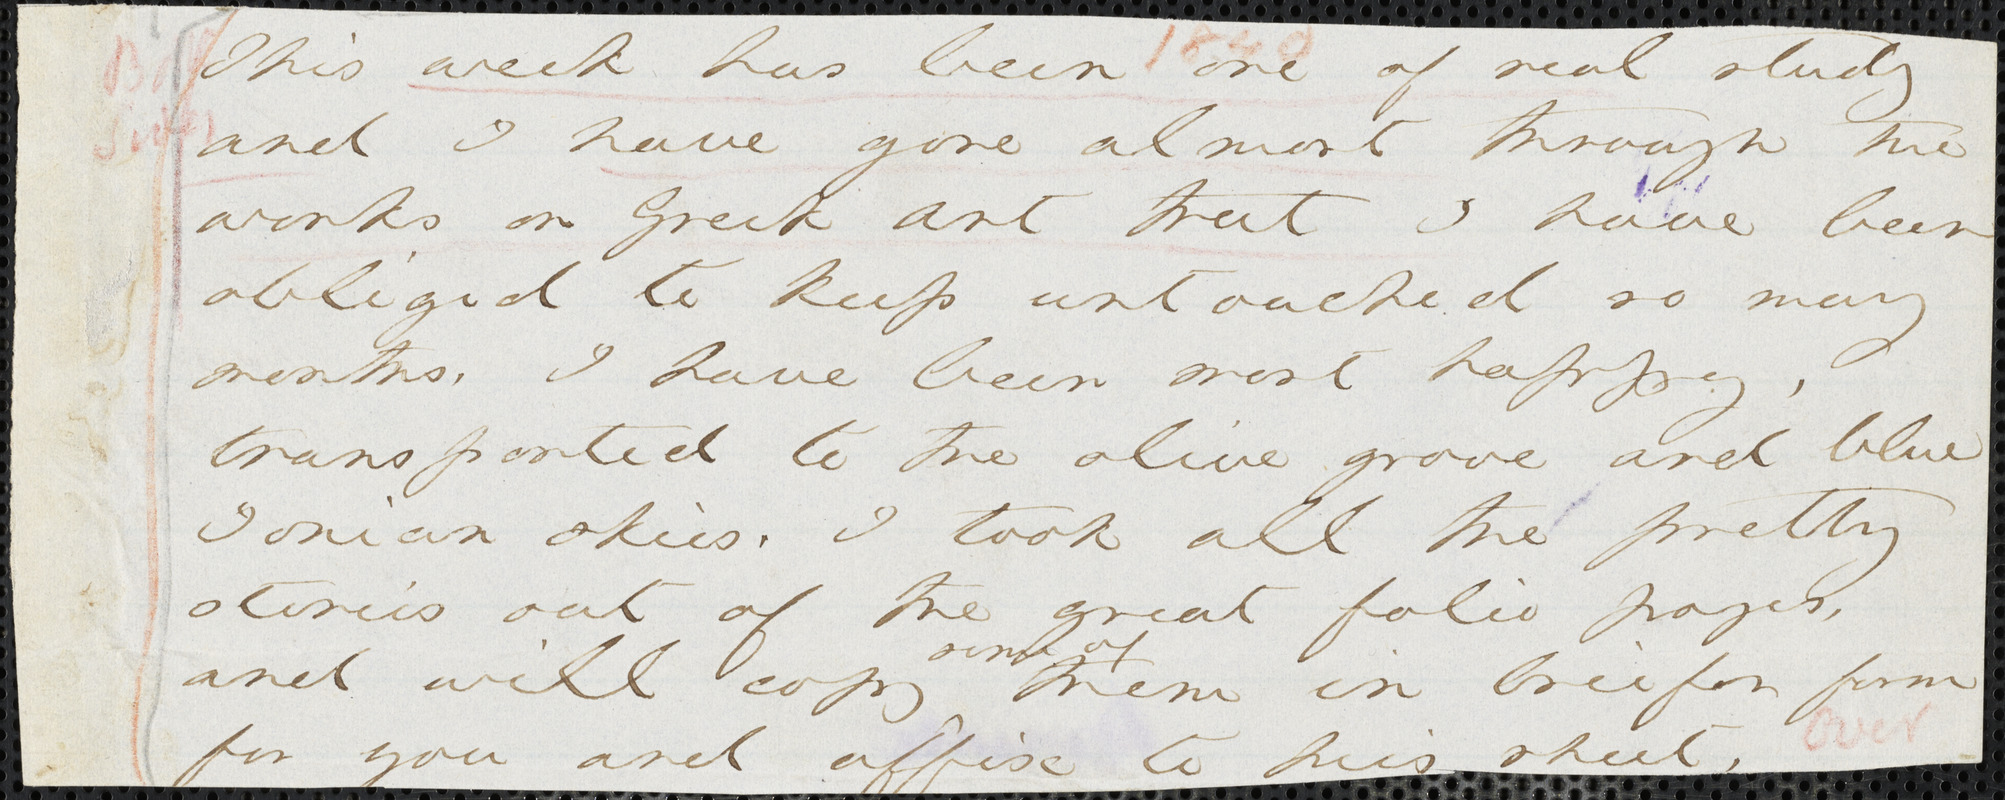 Margaret Fuller autograph letter (fragment) to William Henry Channing, 1840